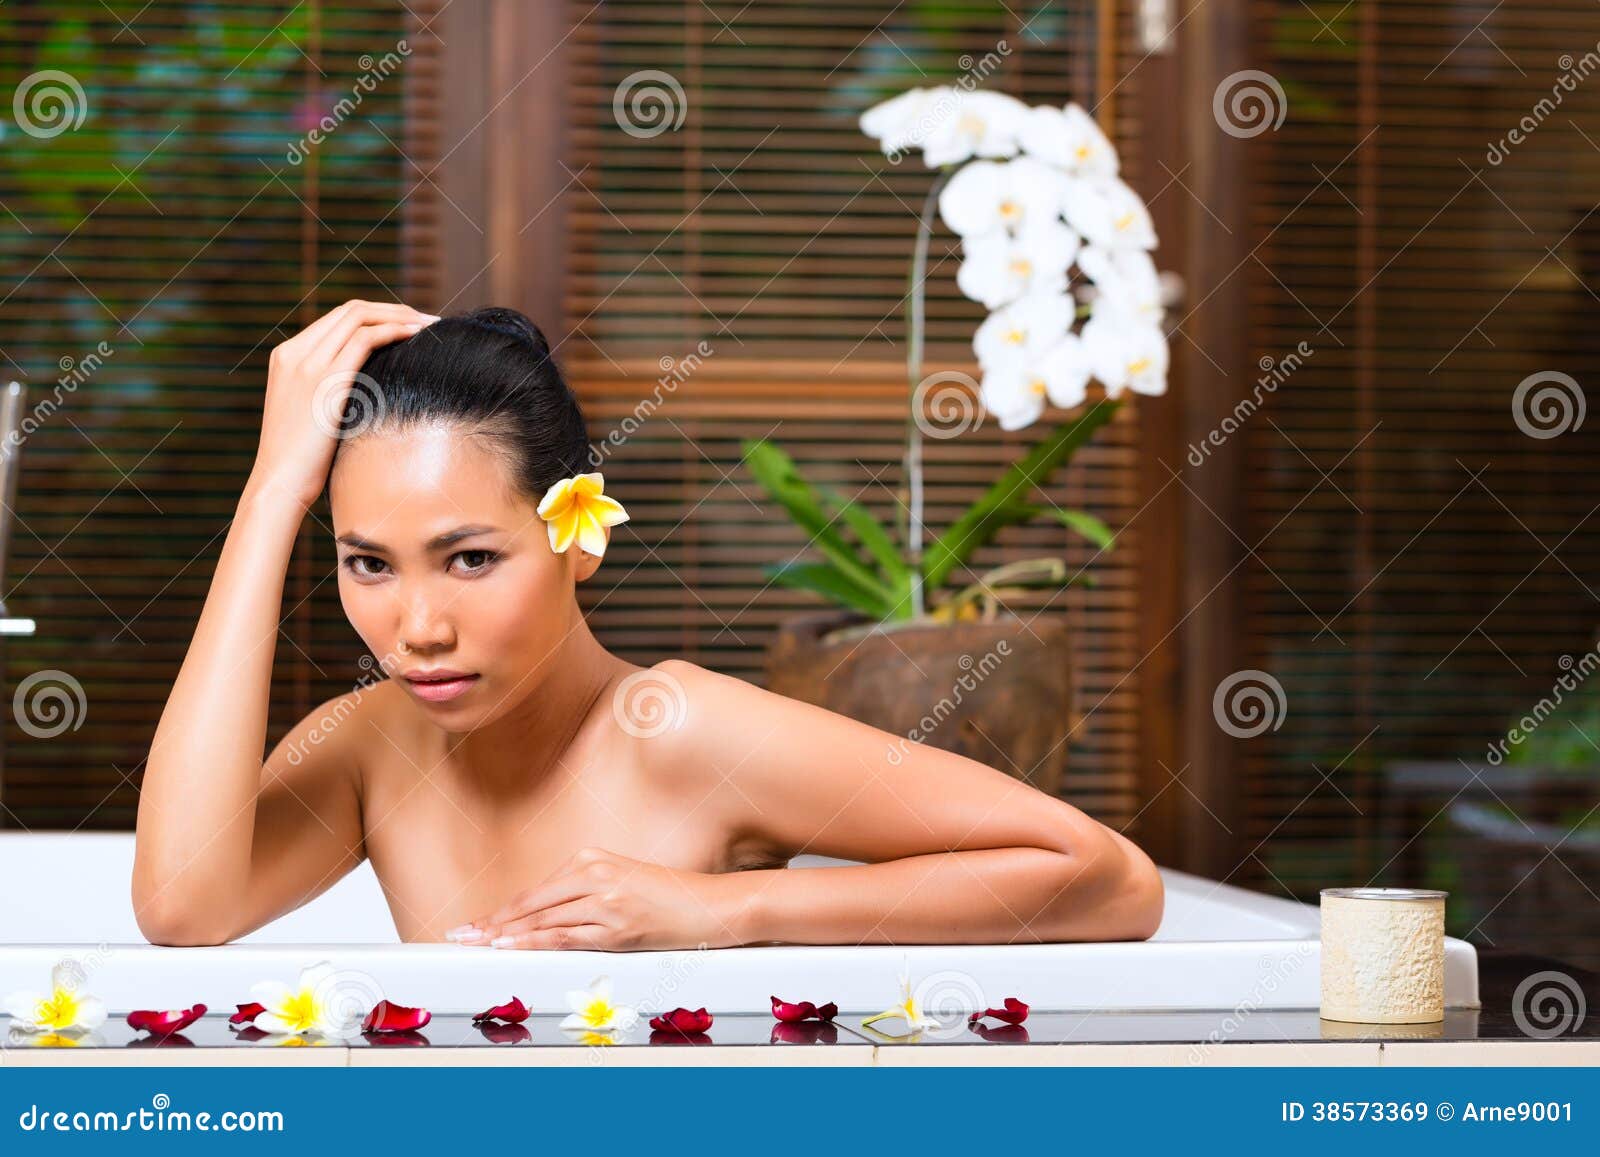 Indonesian Woman Having Wellness Bath In Spa Royalty Free